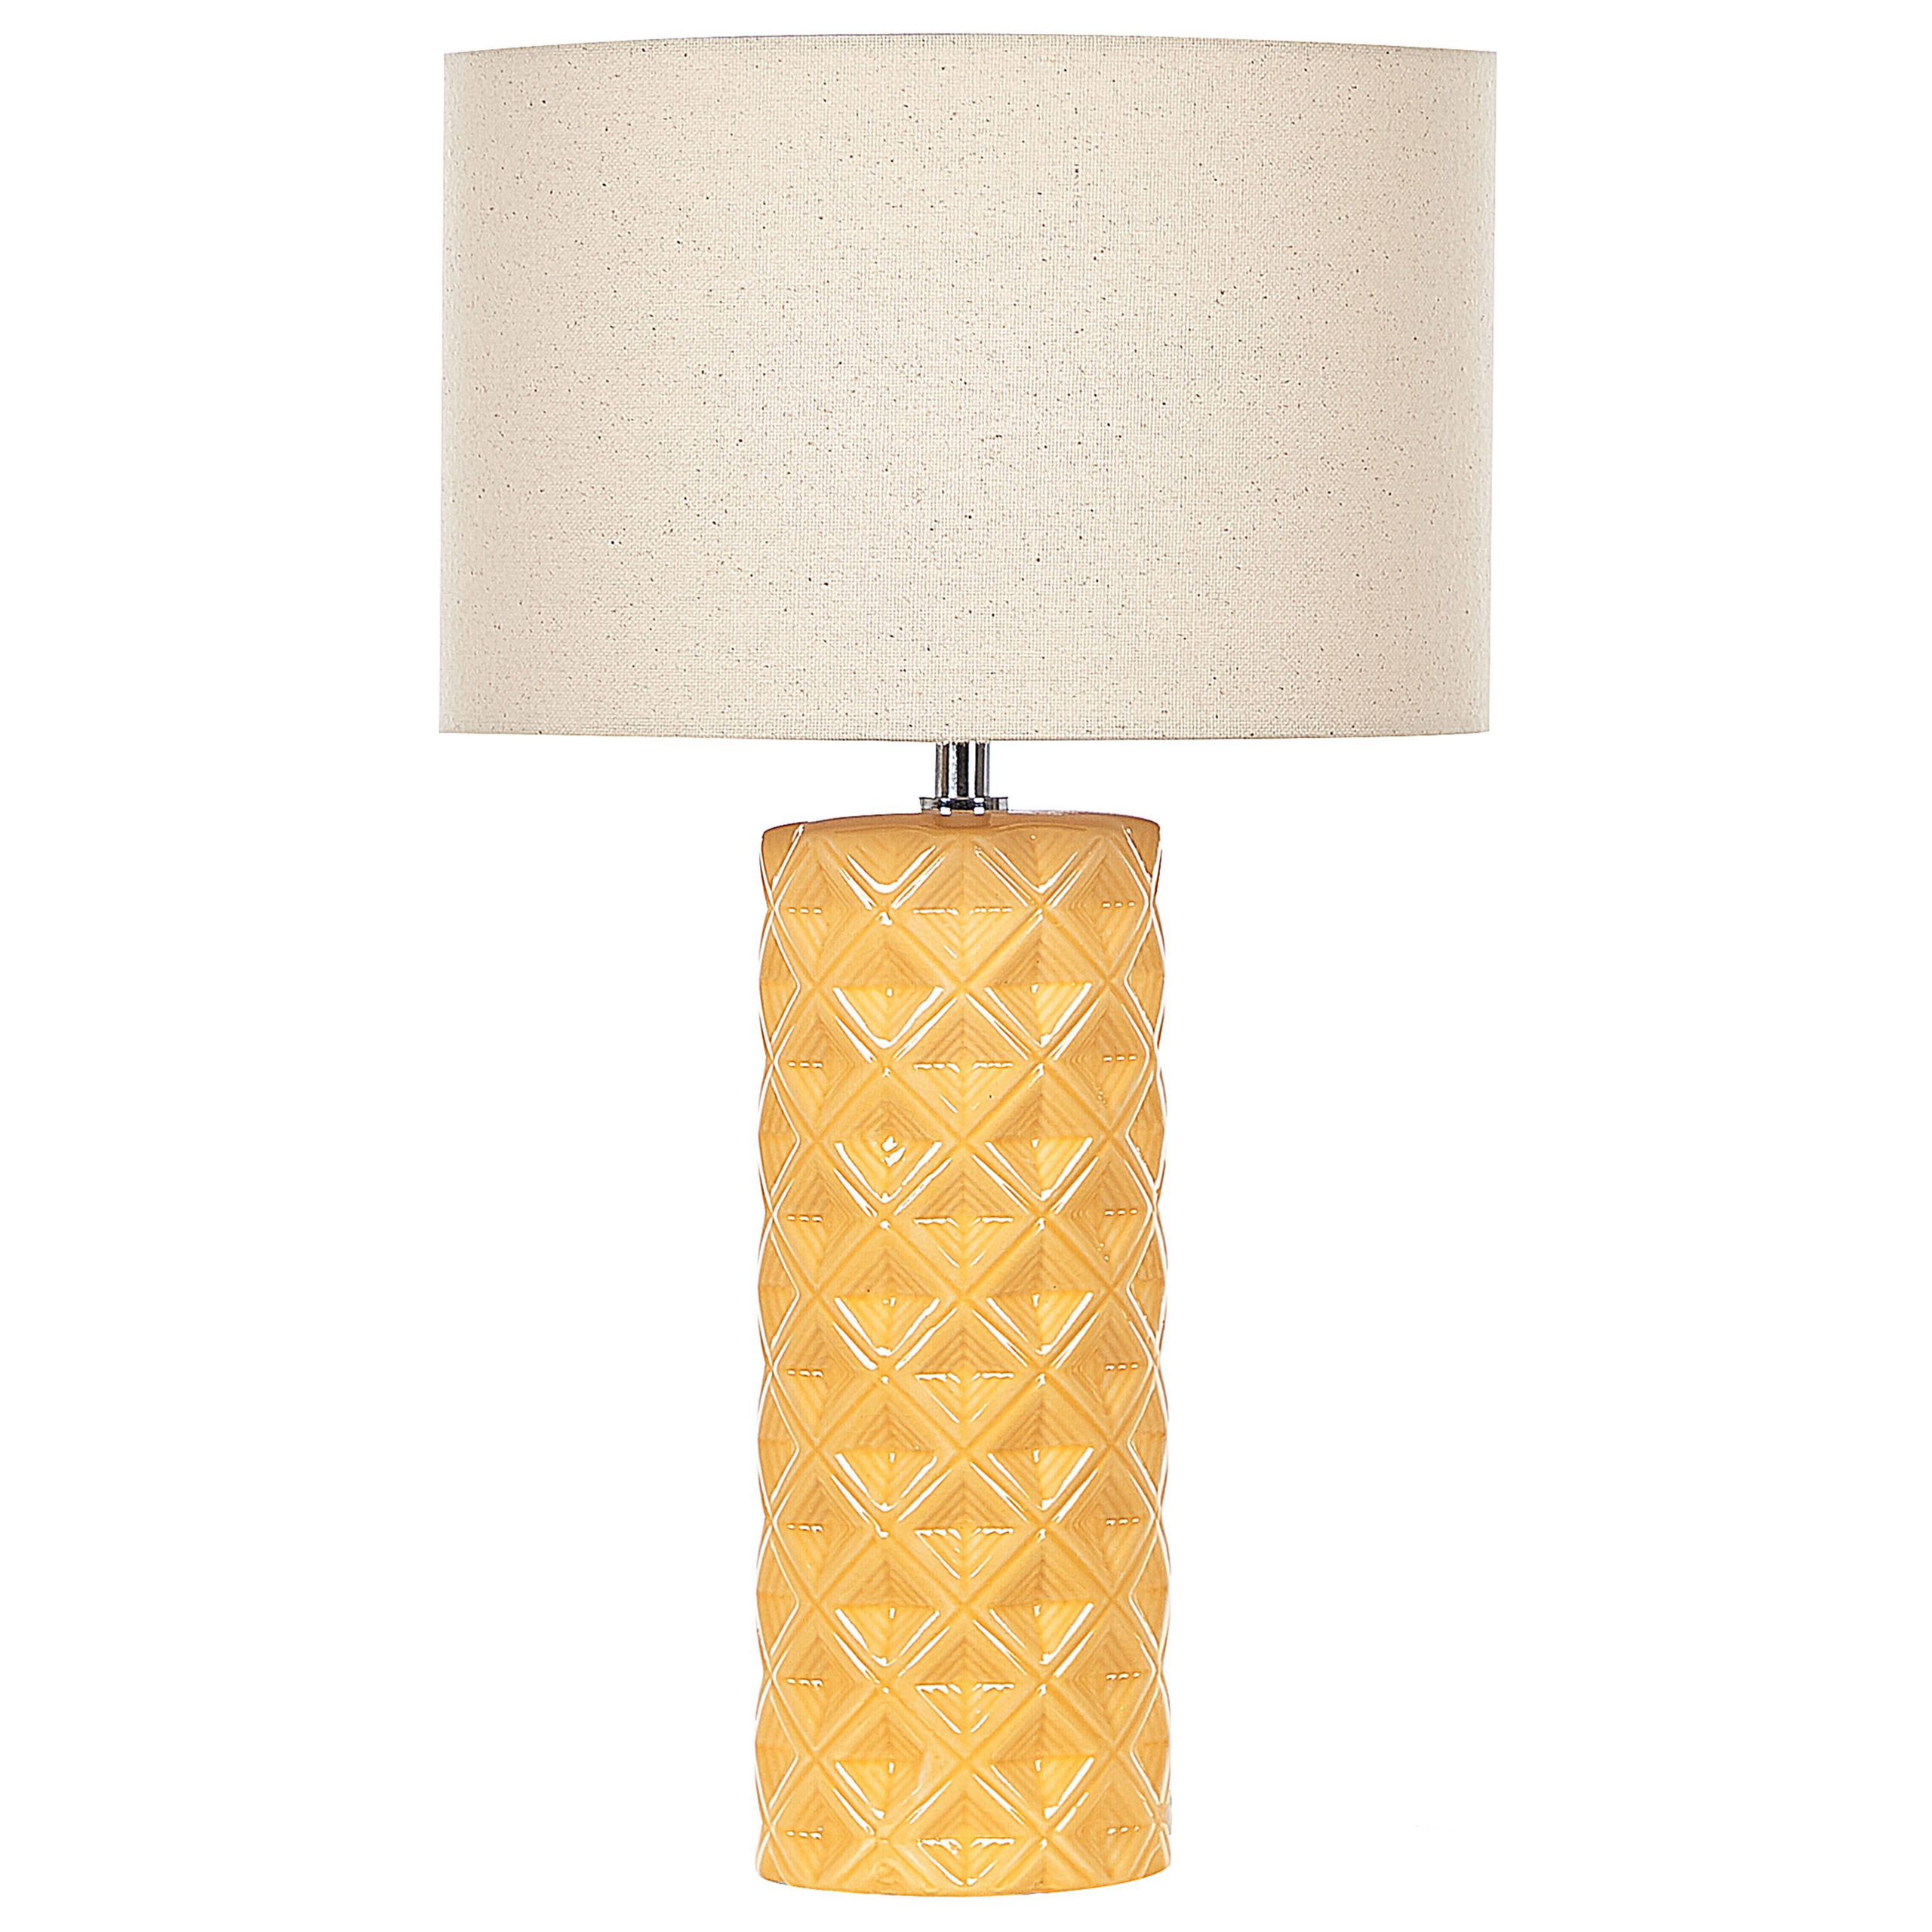 Photos - Desk Lamp Beliani Table Lamp Yellow Ceramic 49 cm Geometric Pattern Beige Drum Shade 